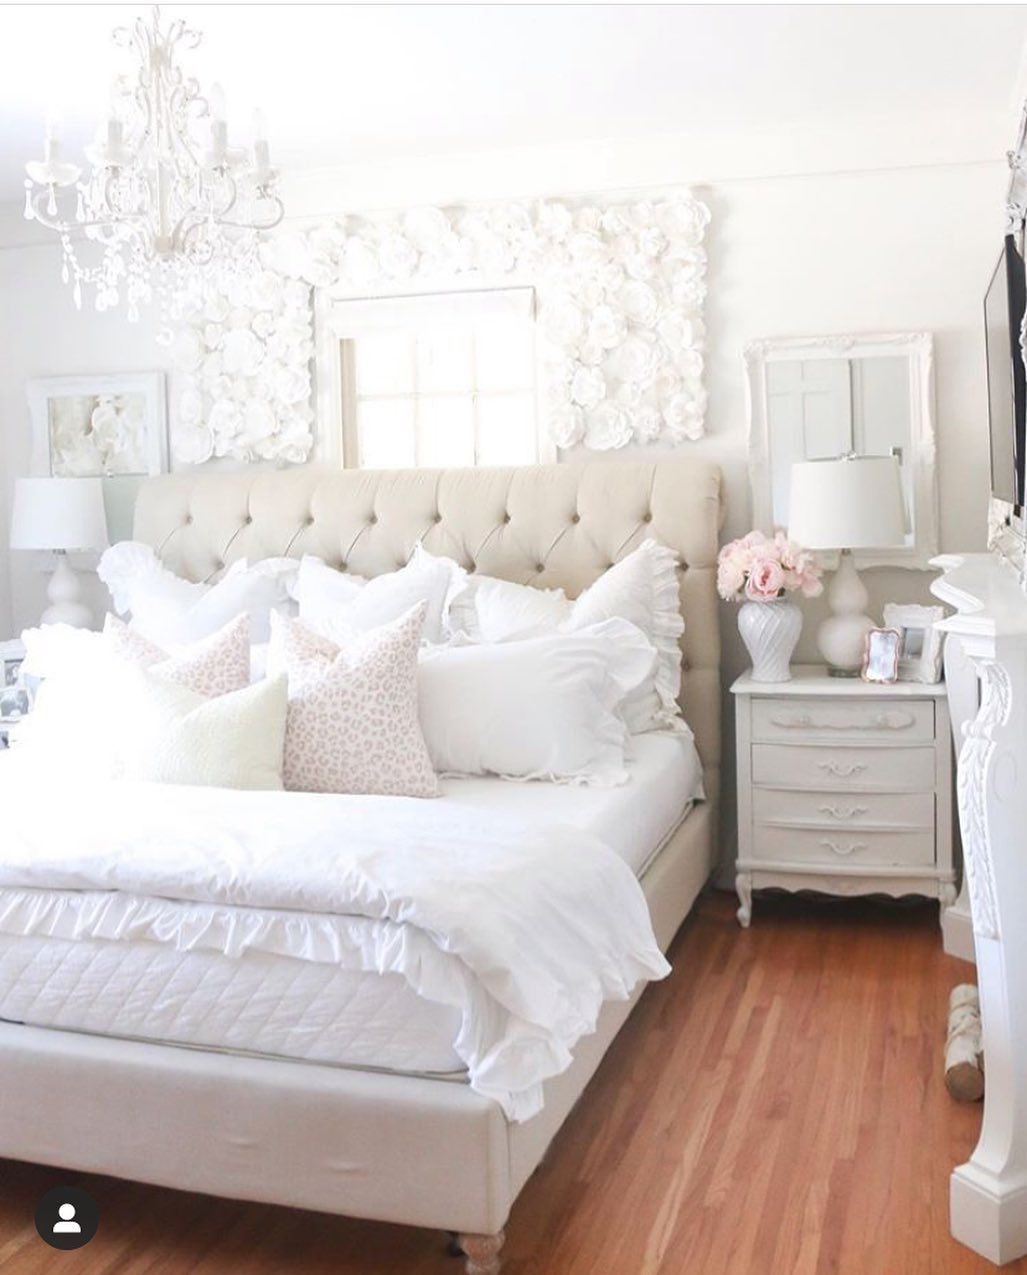 Feminine Bedroom with Floral Wall Decor via @nissalynninteriors